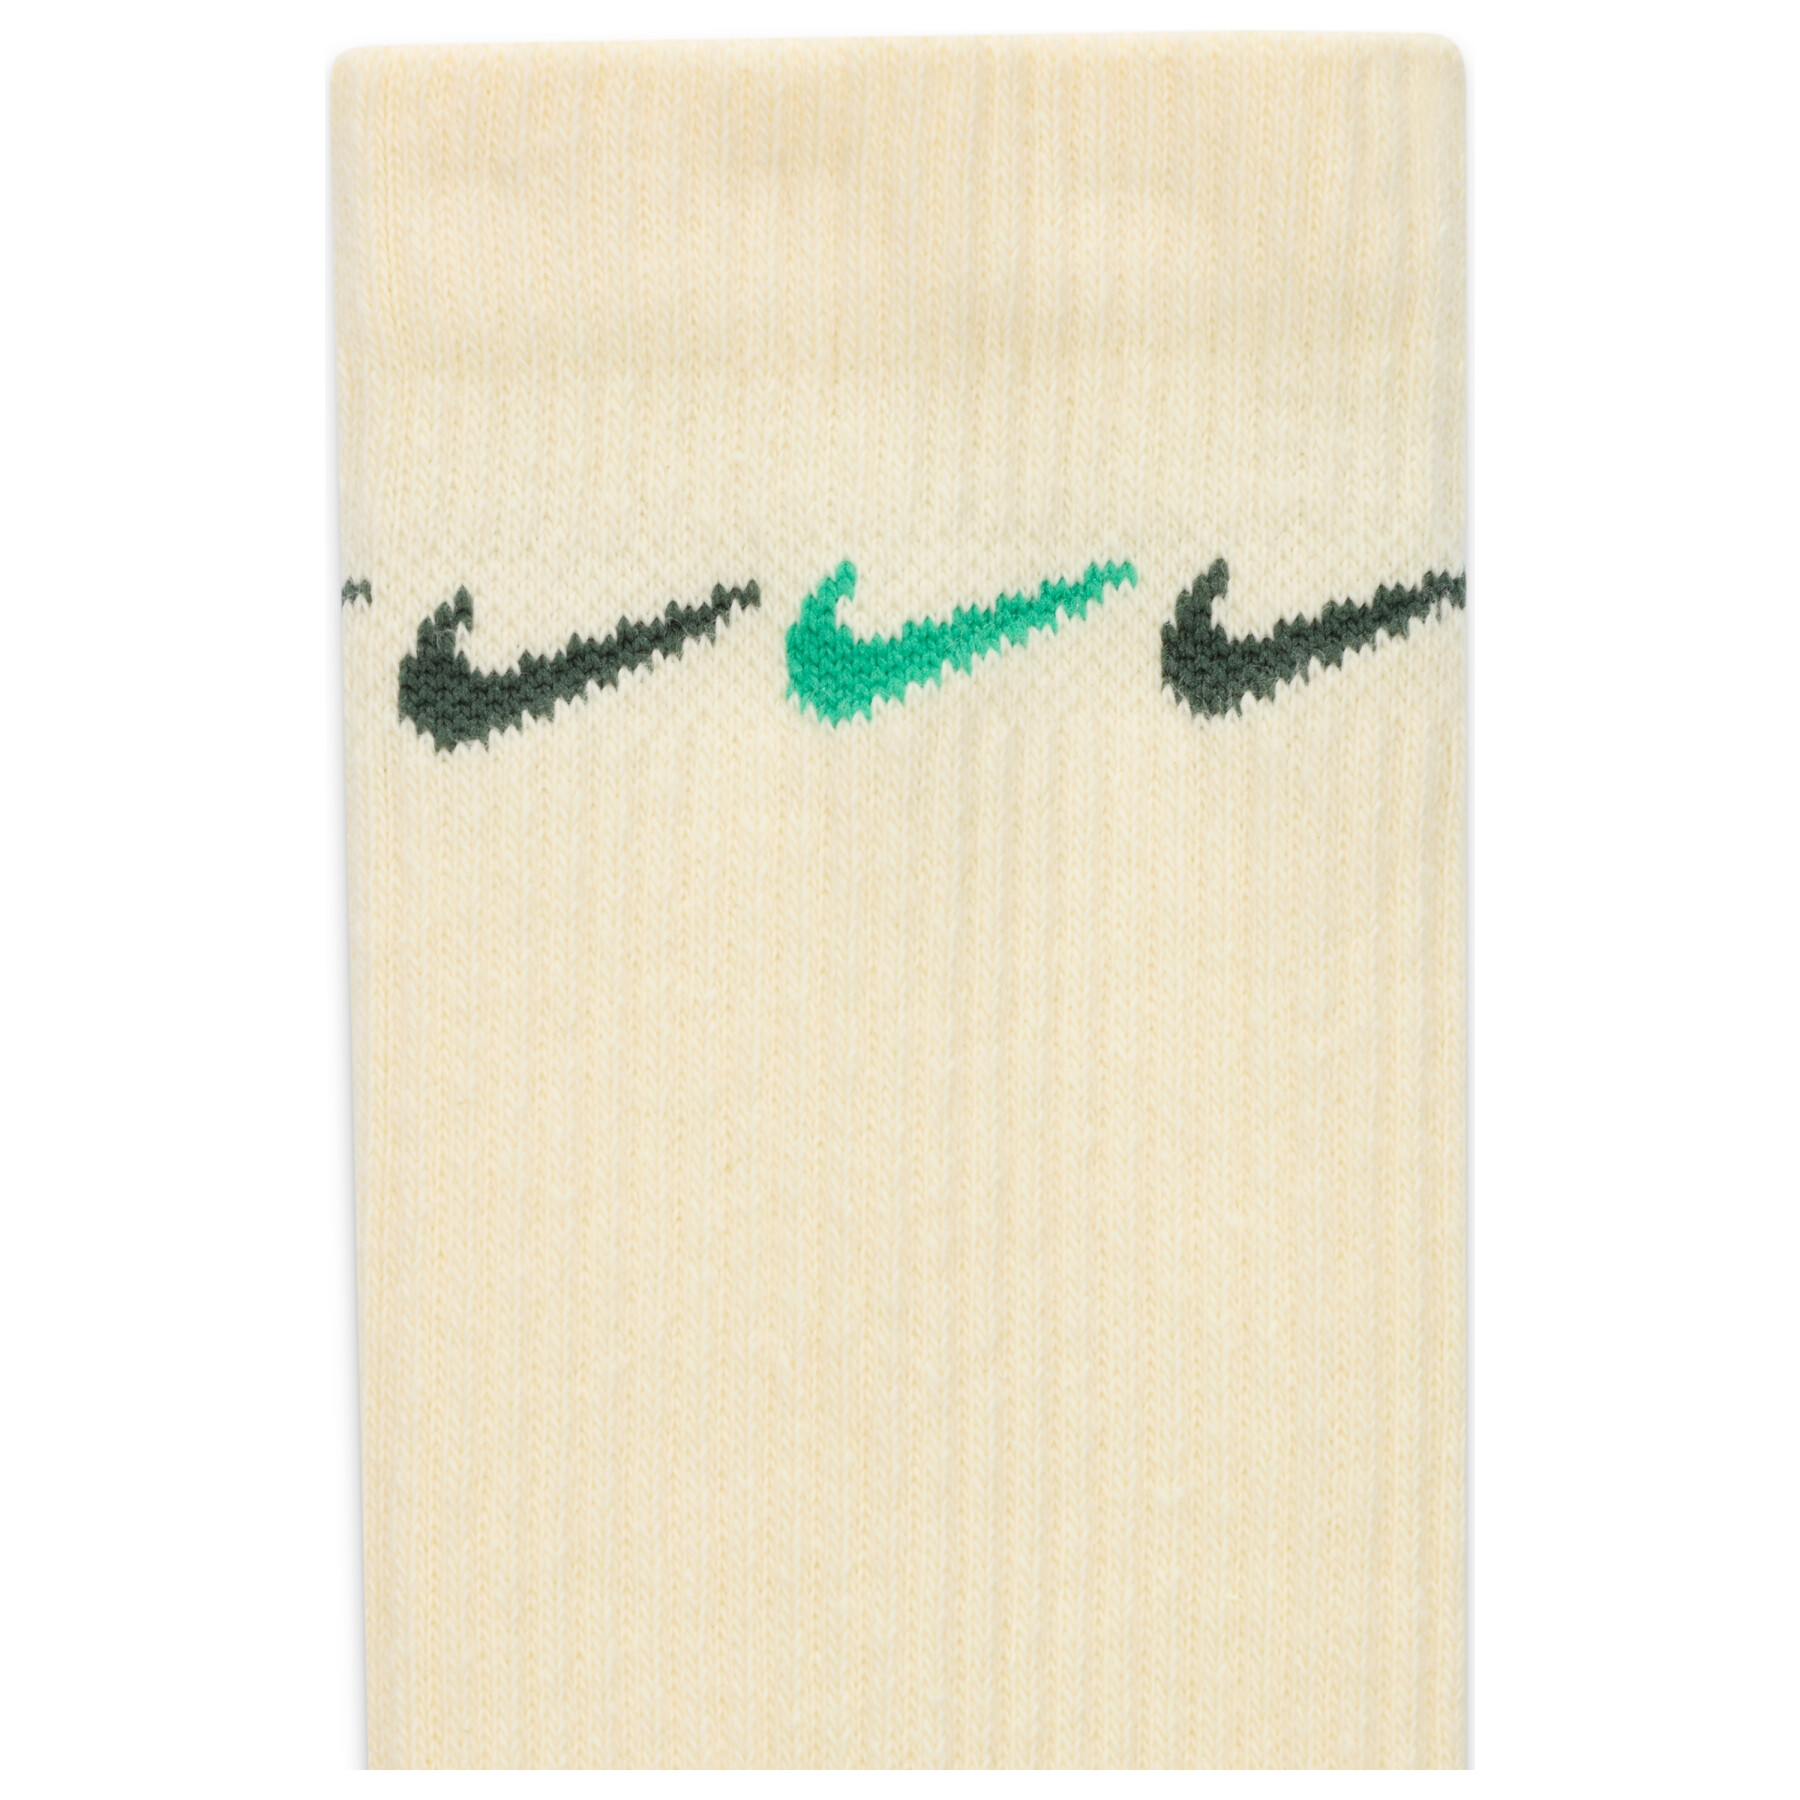 Football Socks Nike Everyday Plus Cushioned (x3)